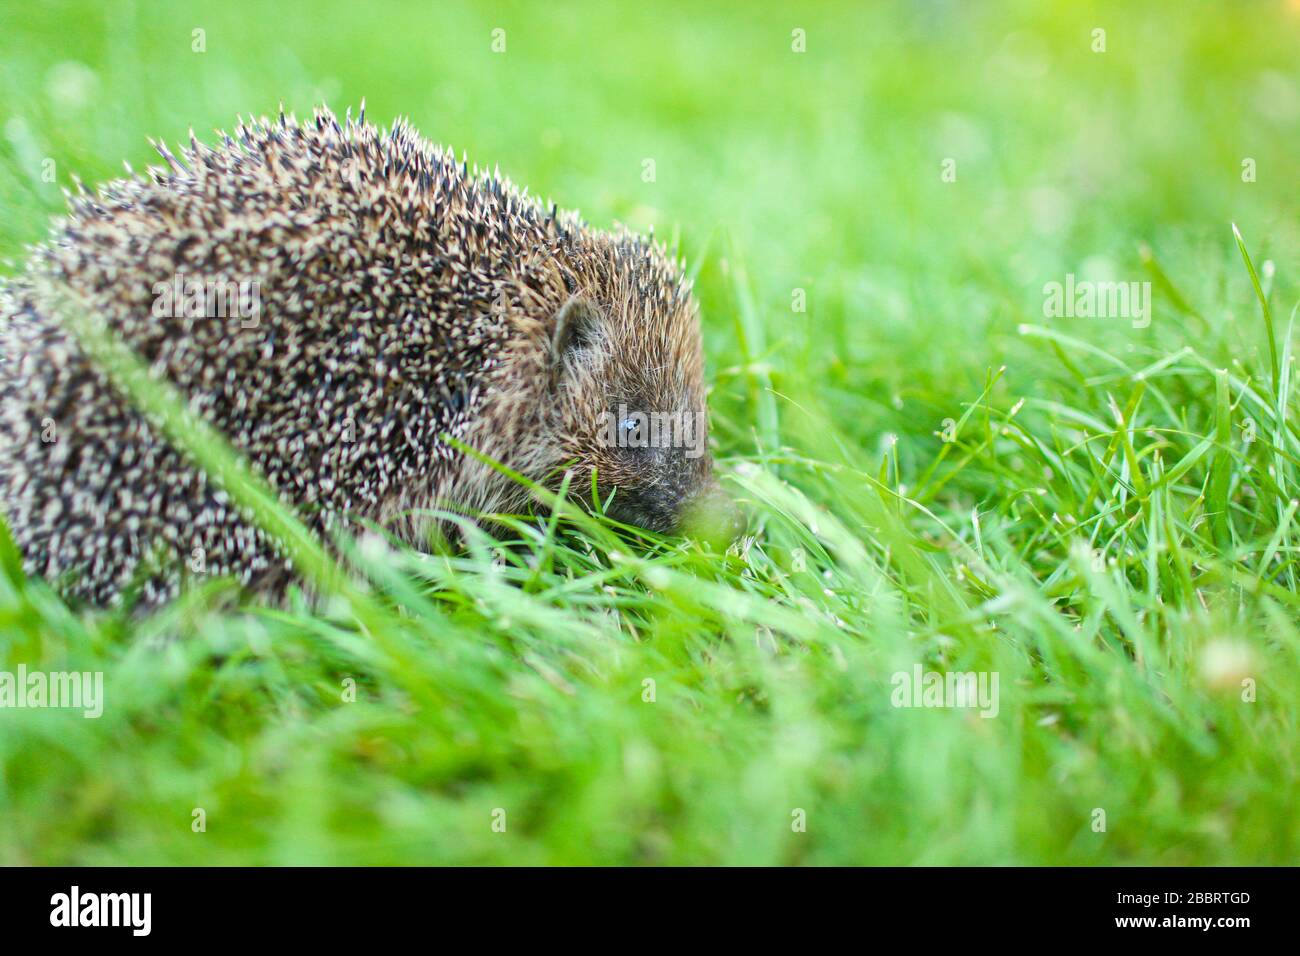 Westeuropäische Hedgehog in grünem Gras, nah dran Stockfoto